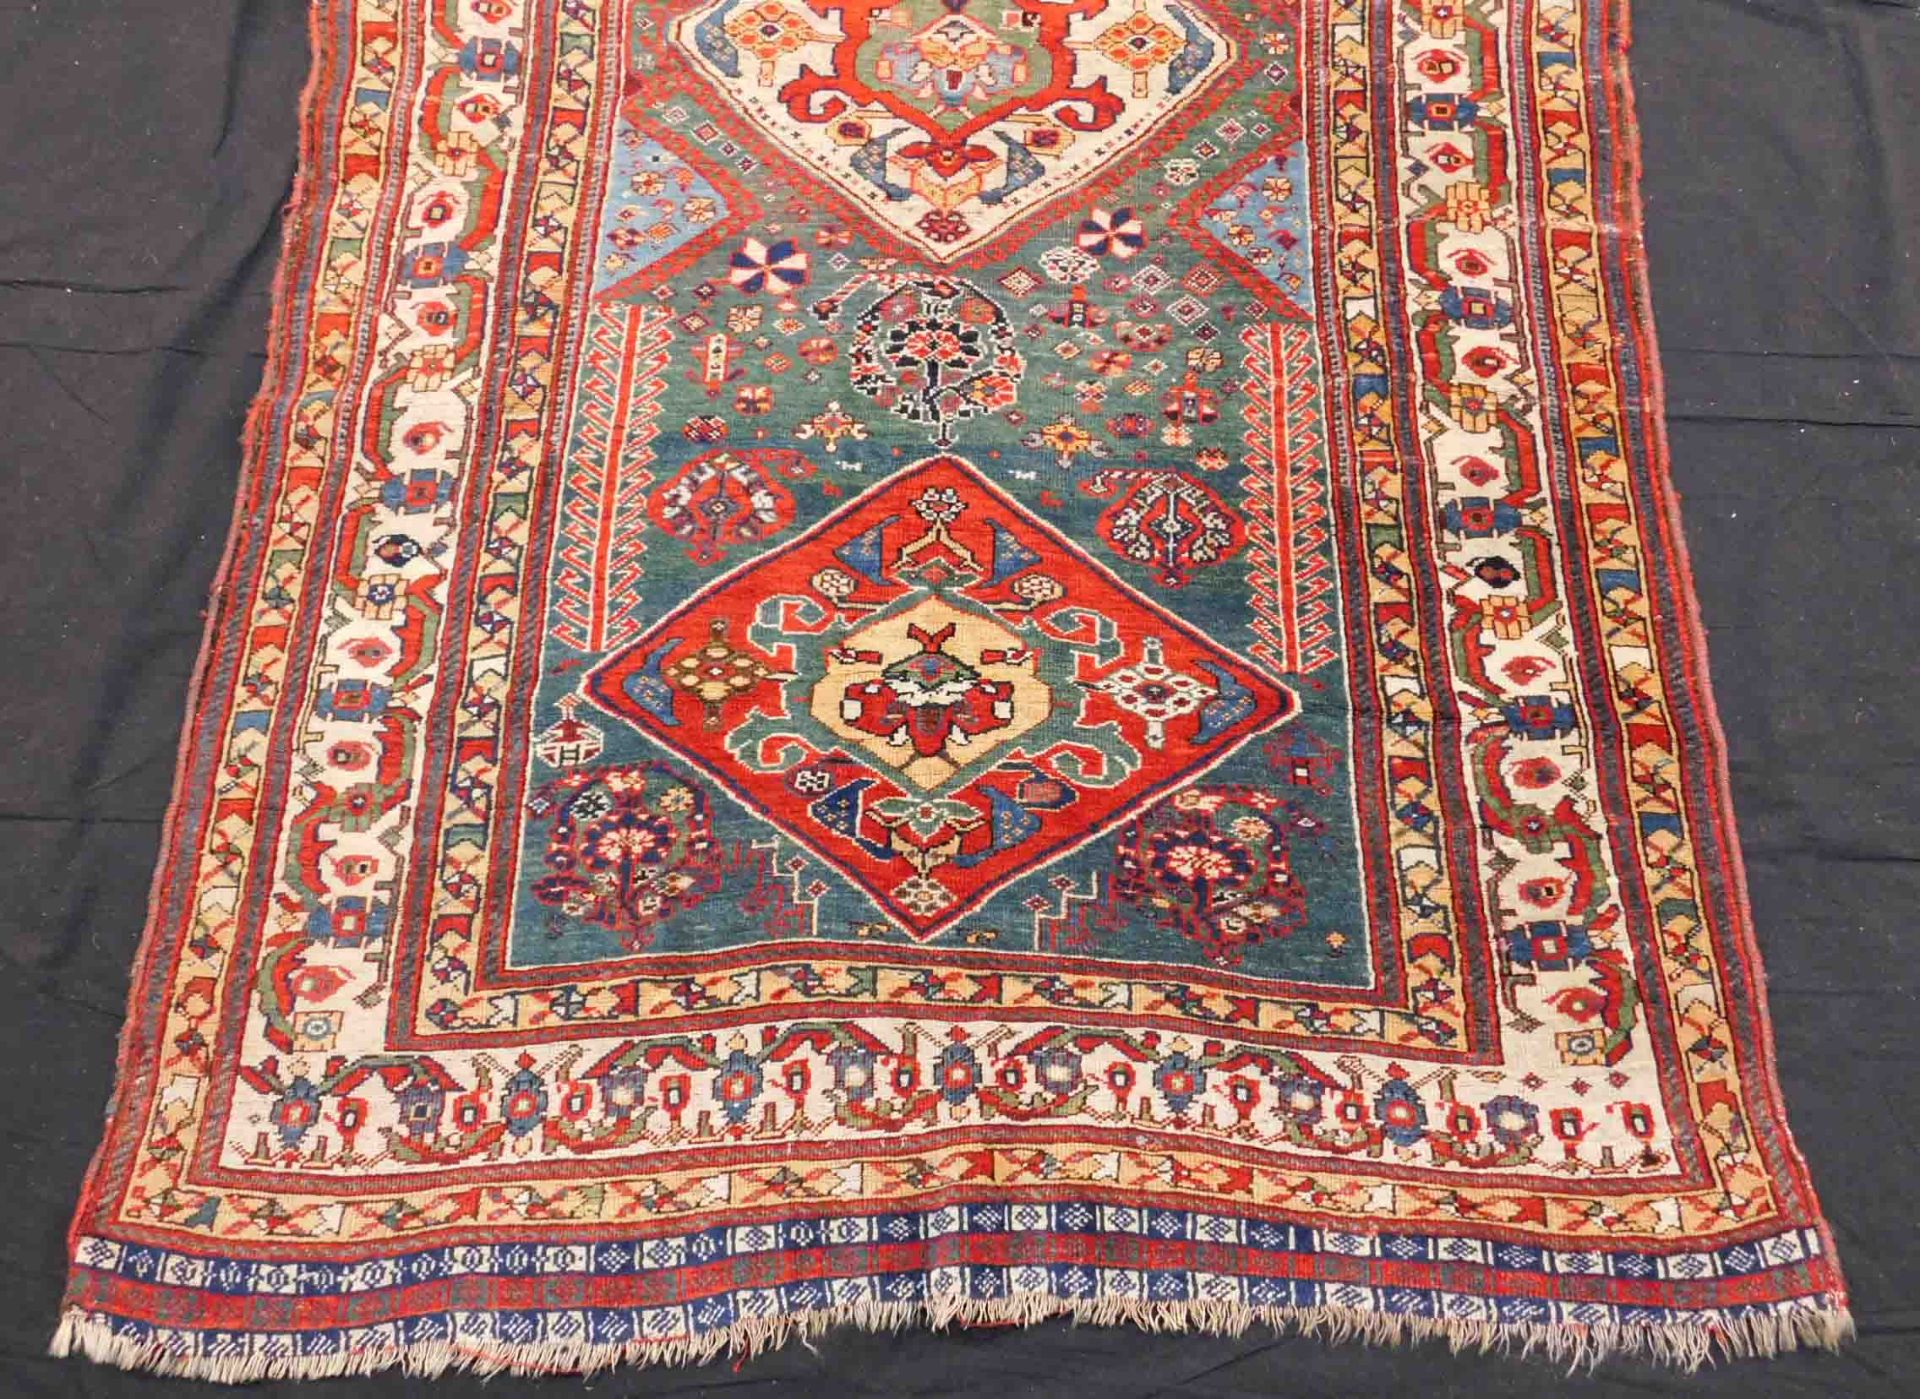 Qashqai Persian carpet. Iran. Antique, around 120-160 years old. - Image 2 of 9